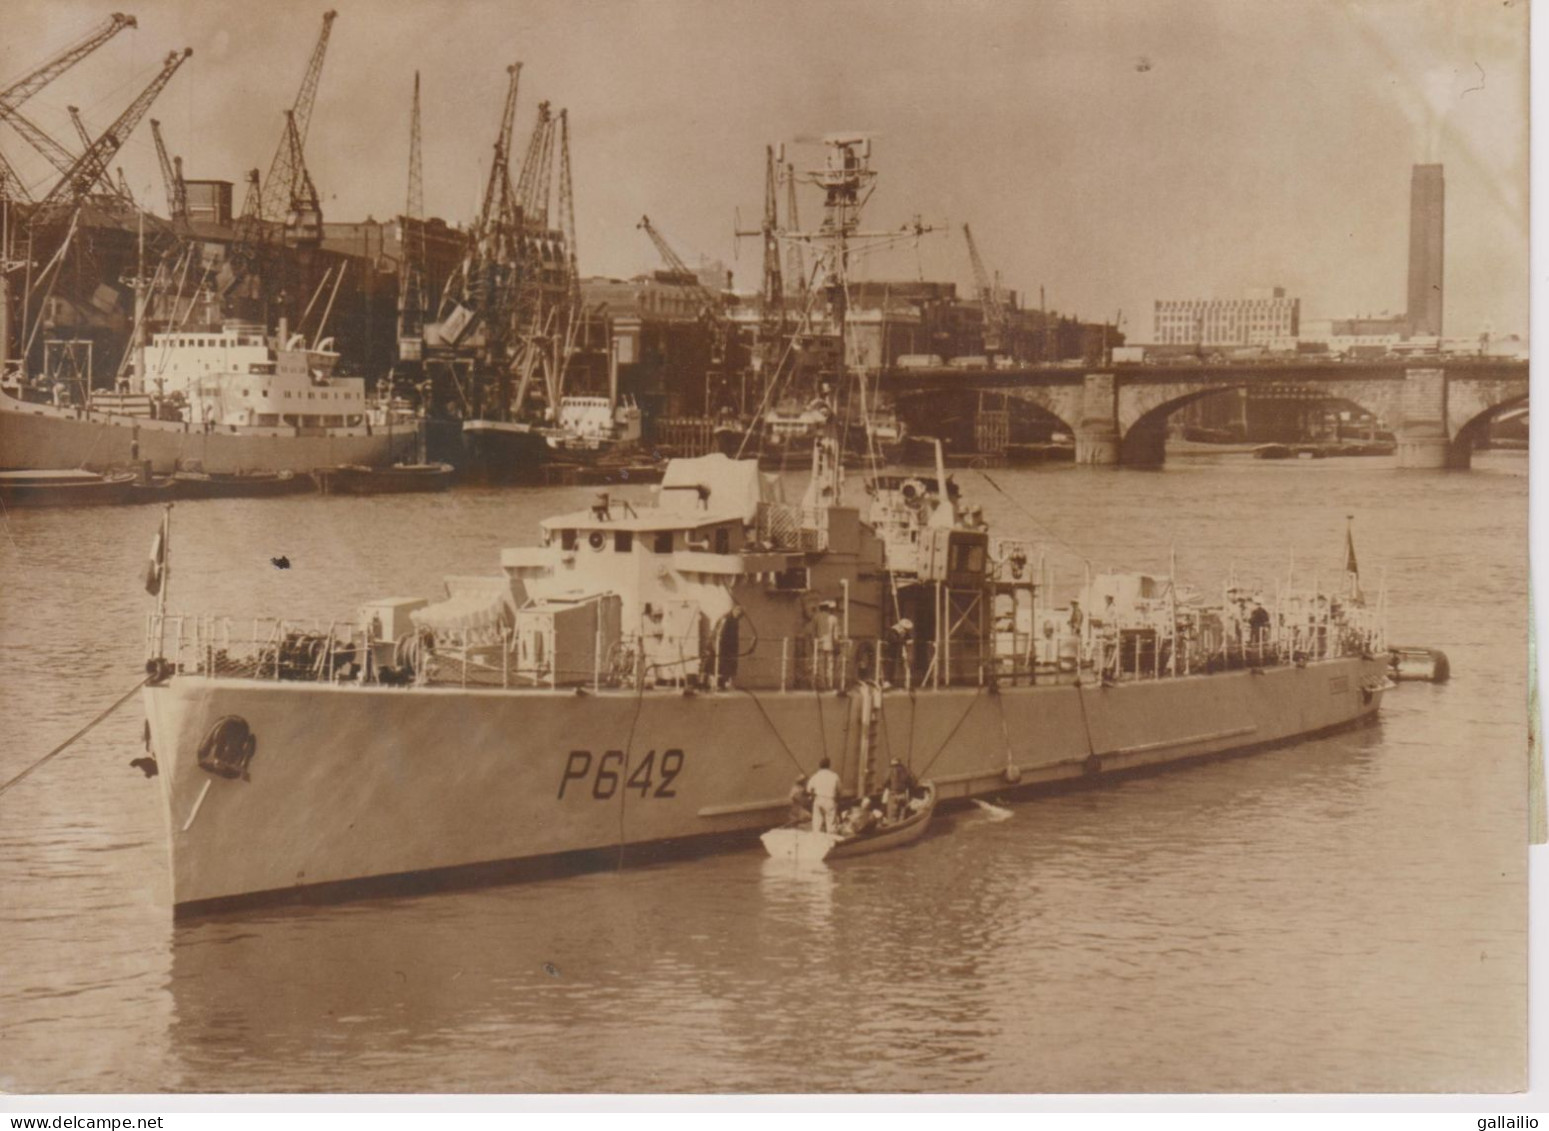 PHOTO PRESSE LA FREGATE L'OPINIATRE A LONDRES MAI 1960 FORMAT 13 X 18 CMS - Schiffe